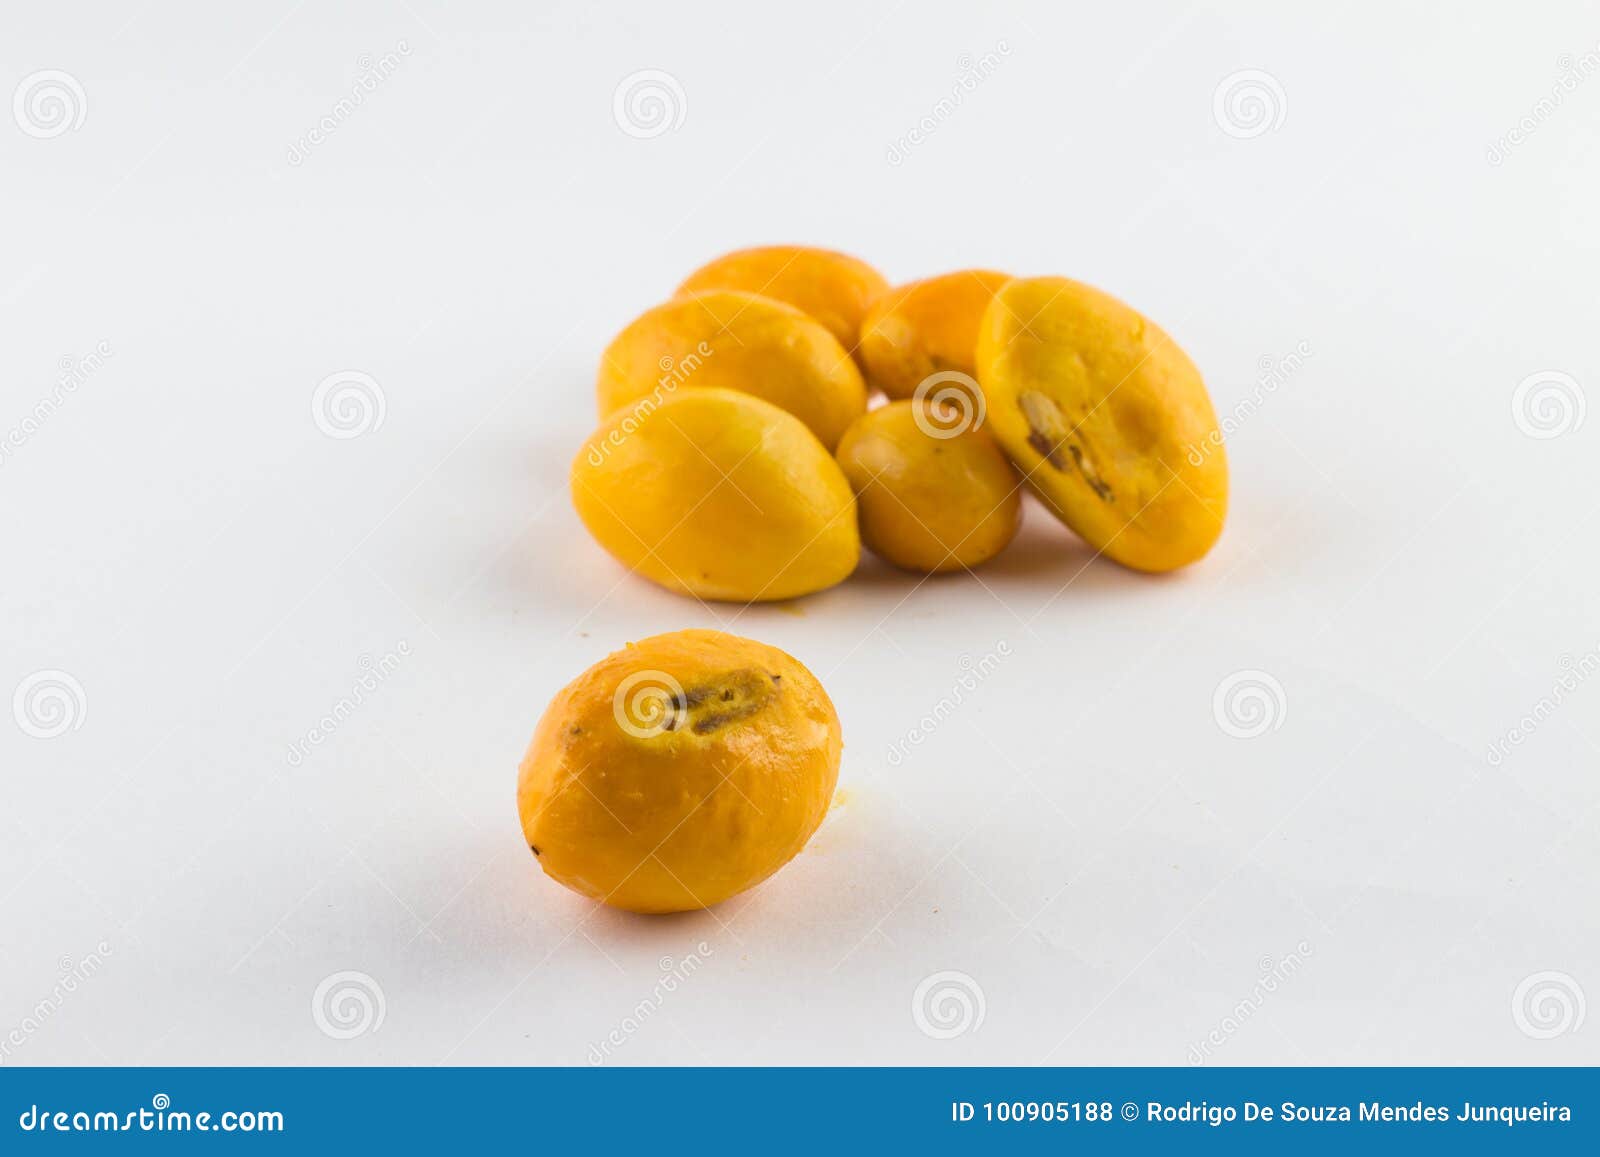 pequi. brazilian fruit of cerrado